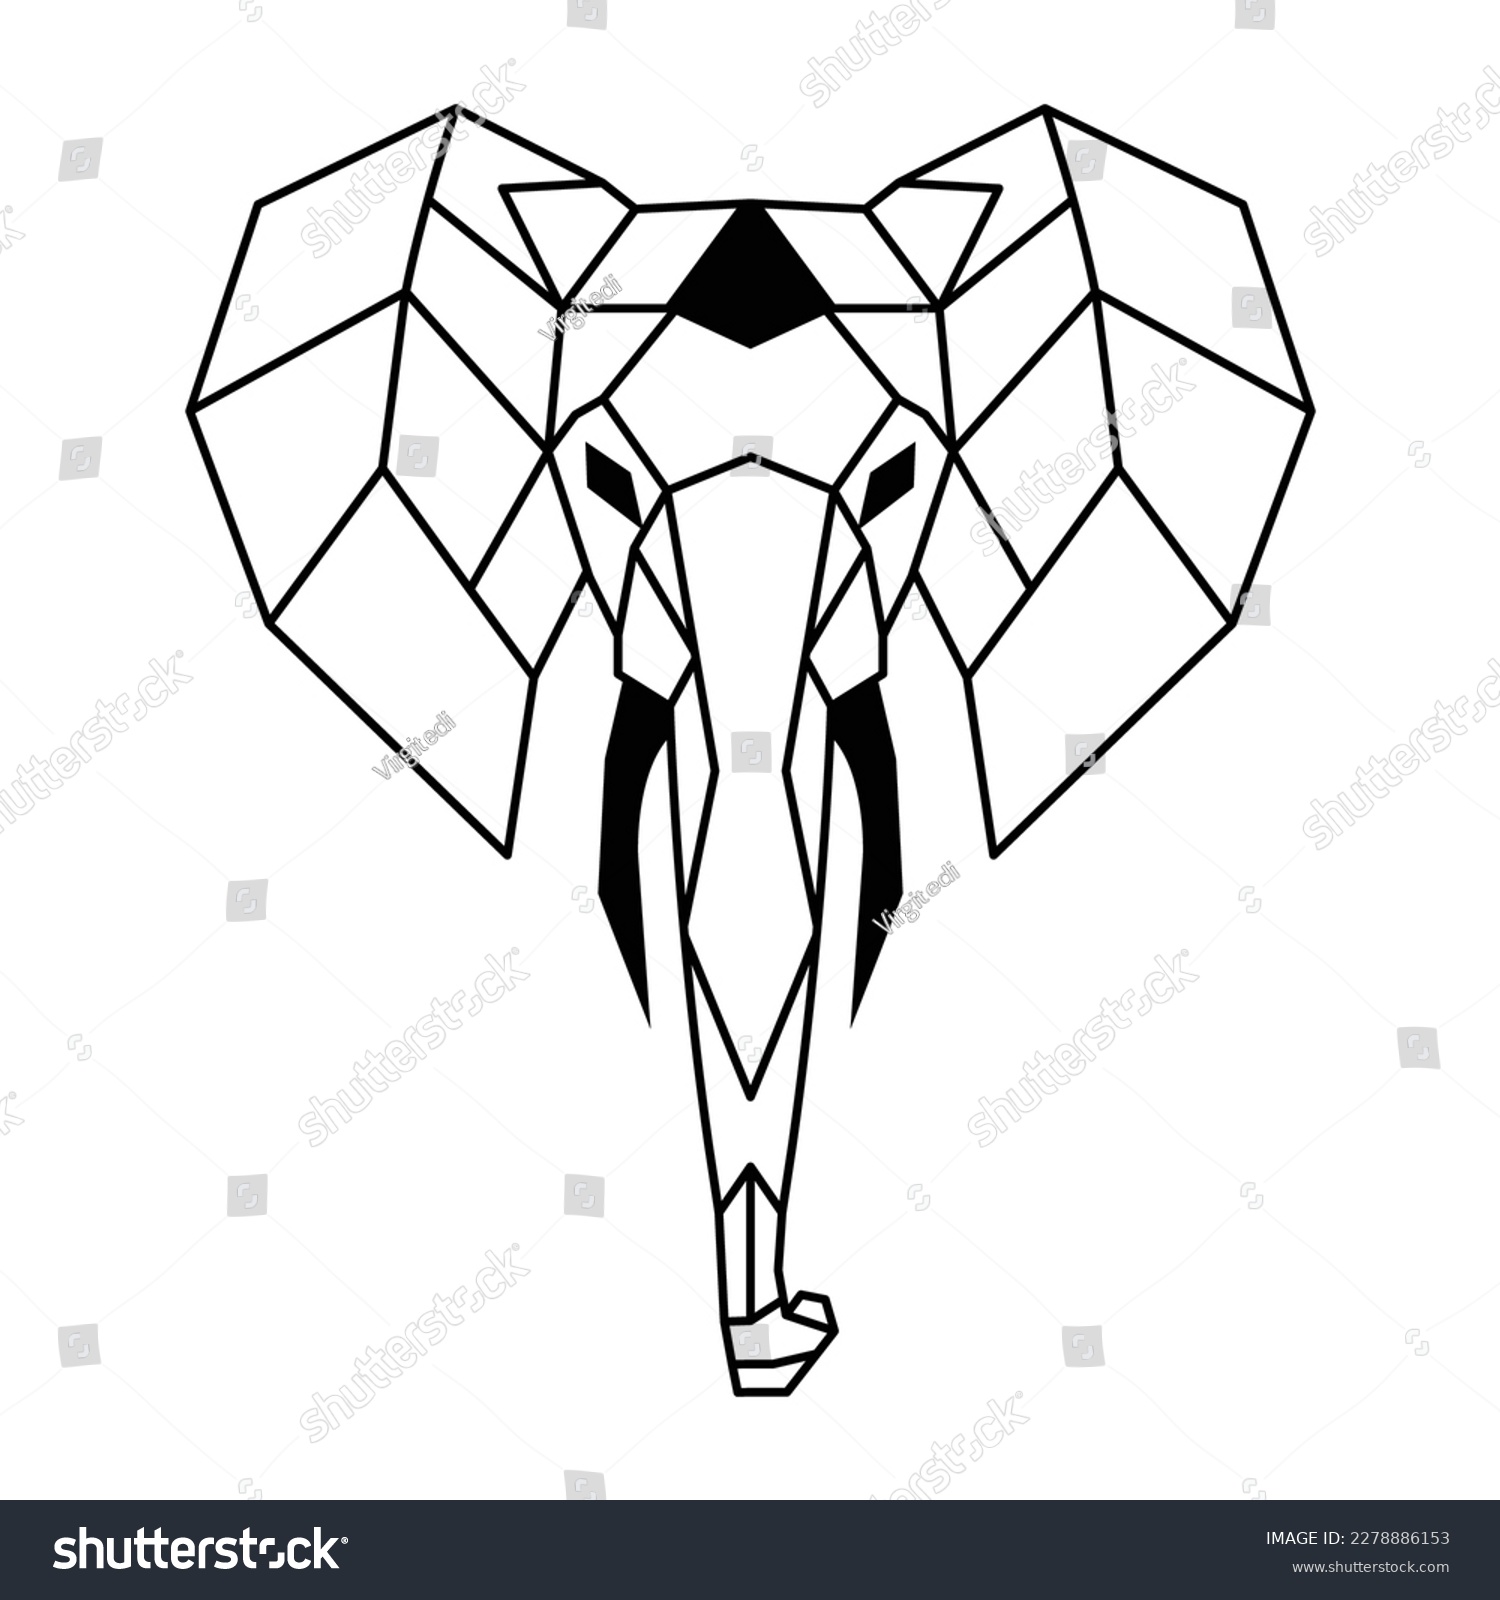 SVG of Polygonal elephant face design drawing svg